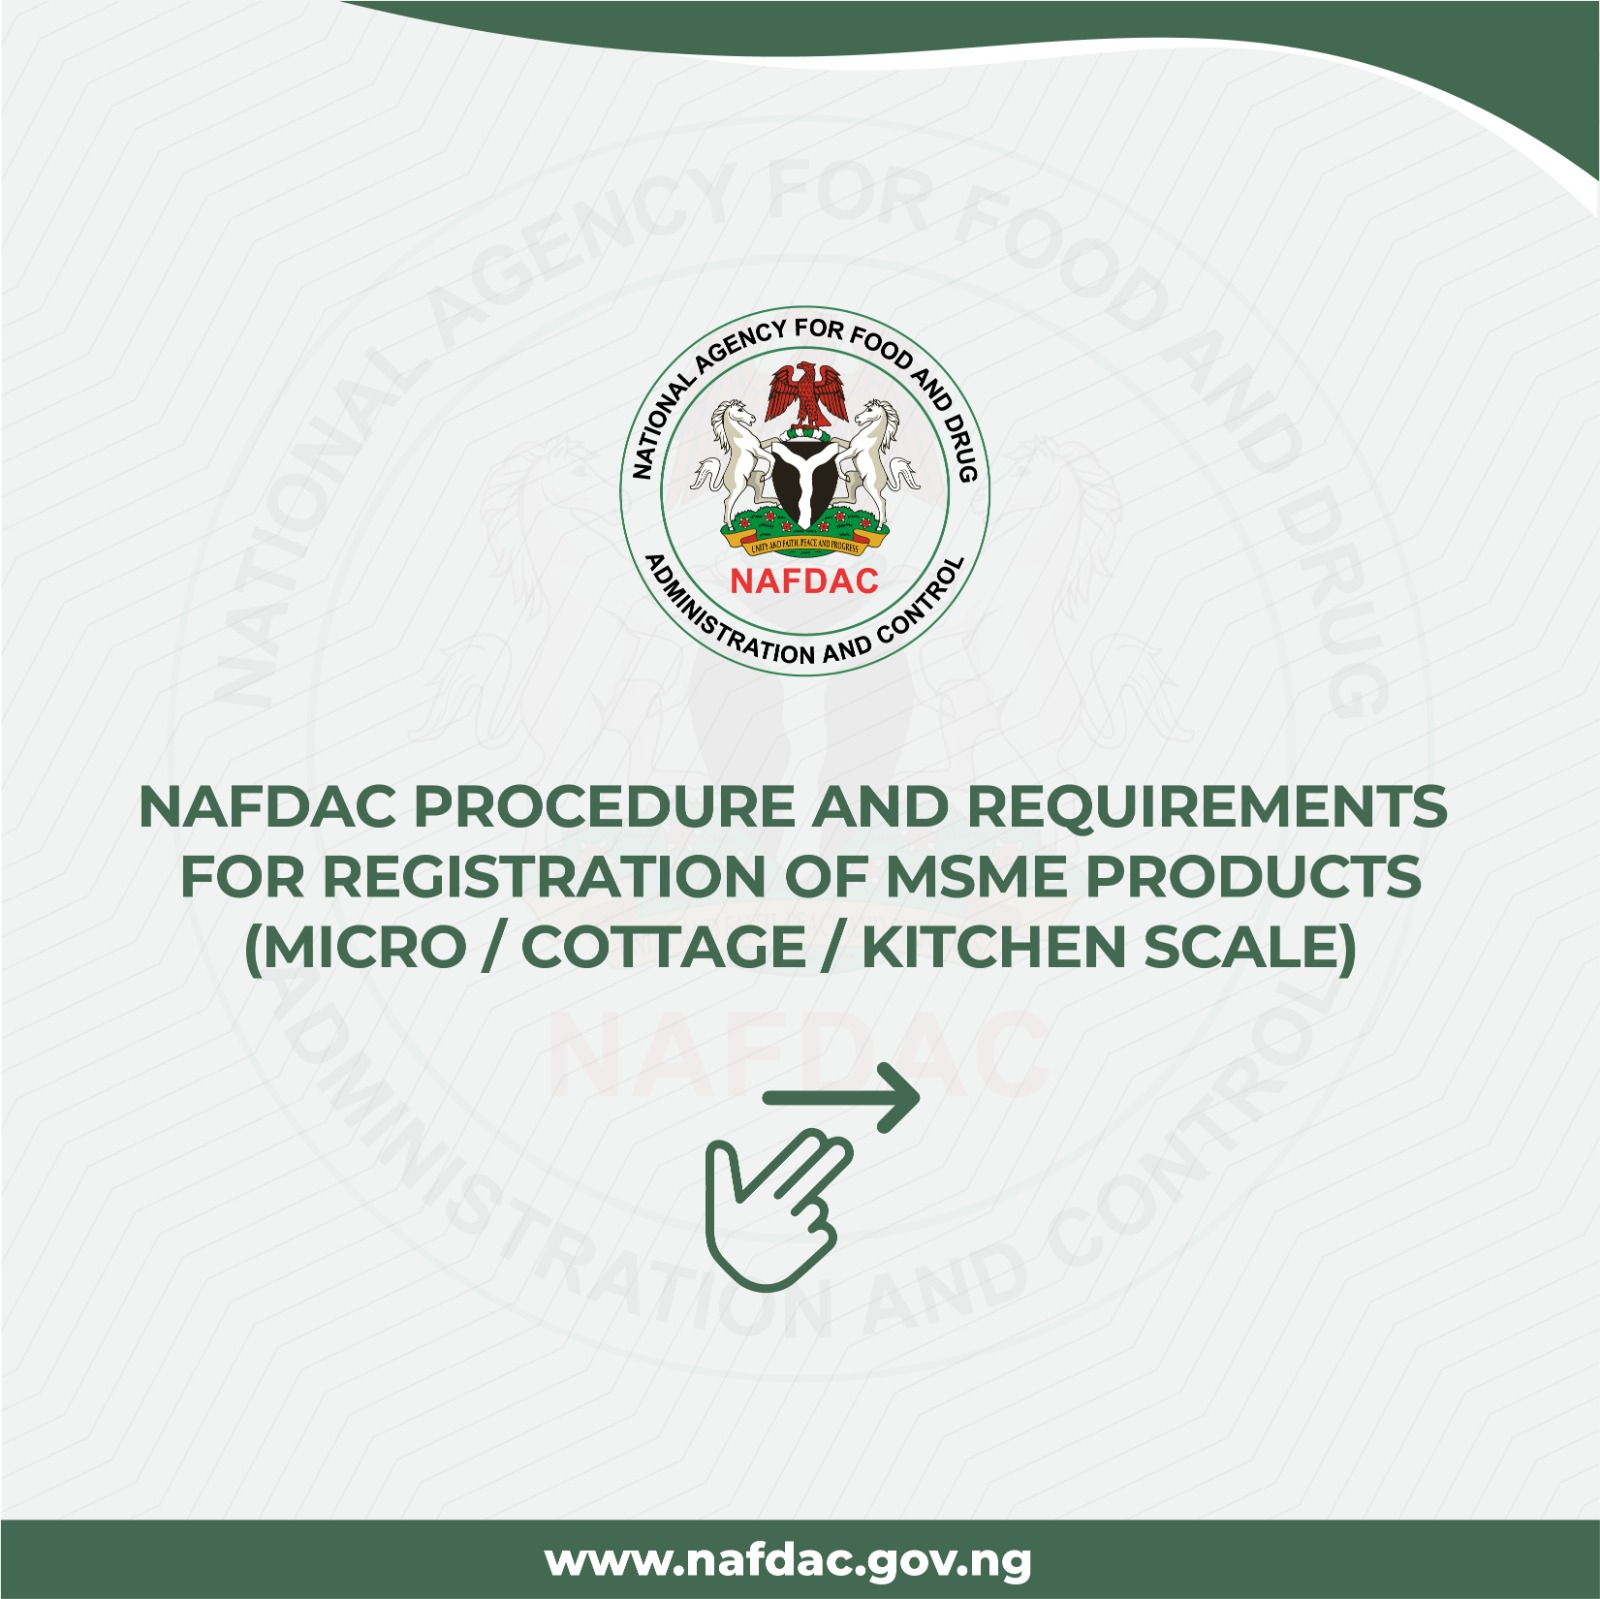 NAFDAC Registration Requirements, Procedure and FAQs